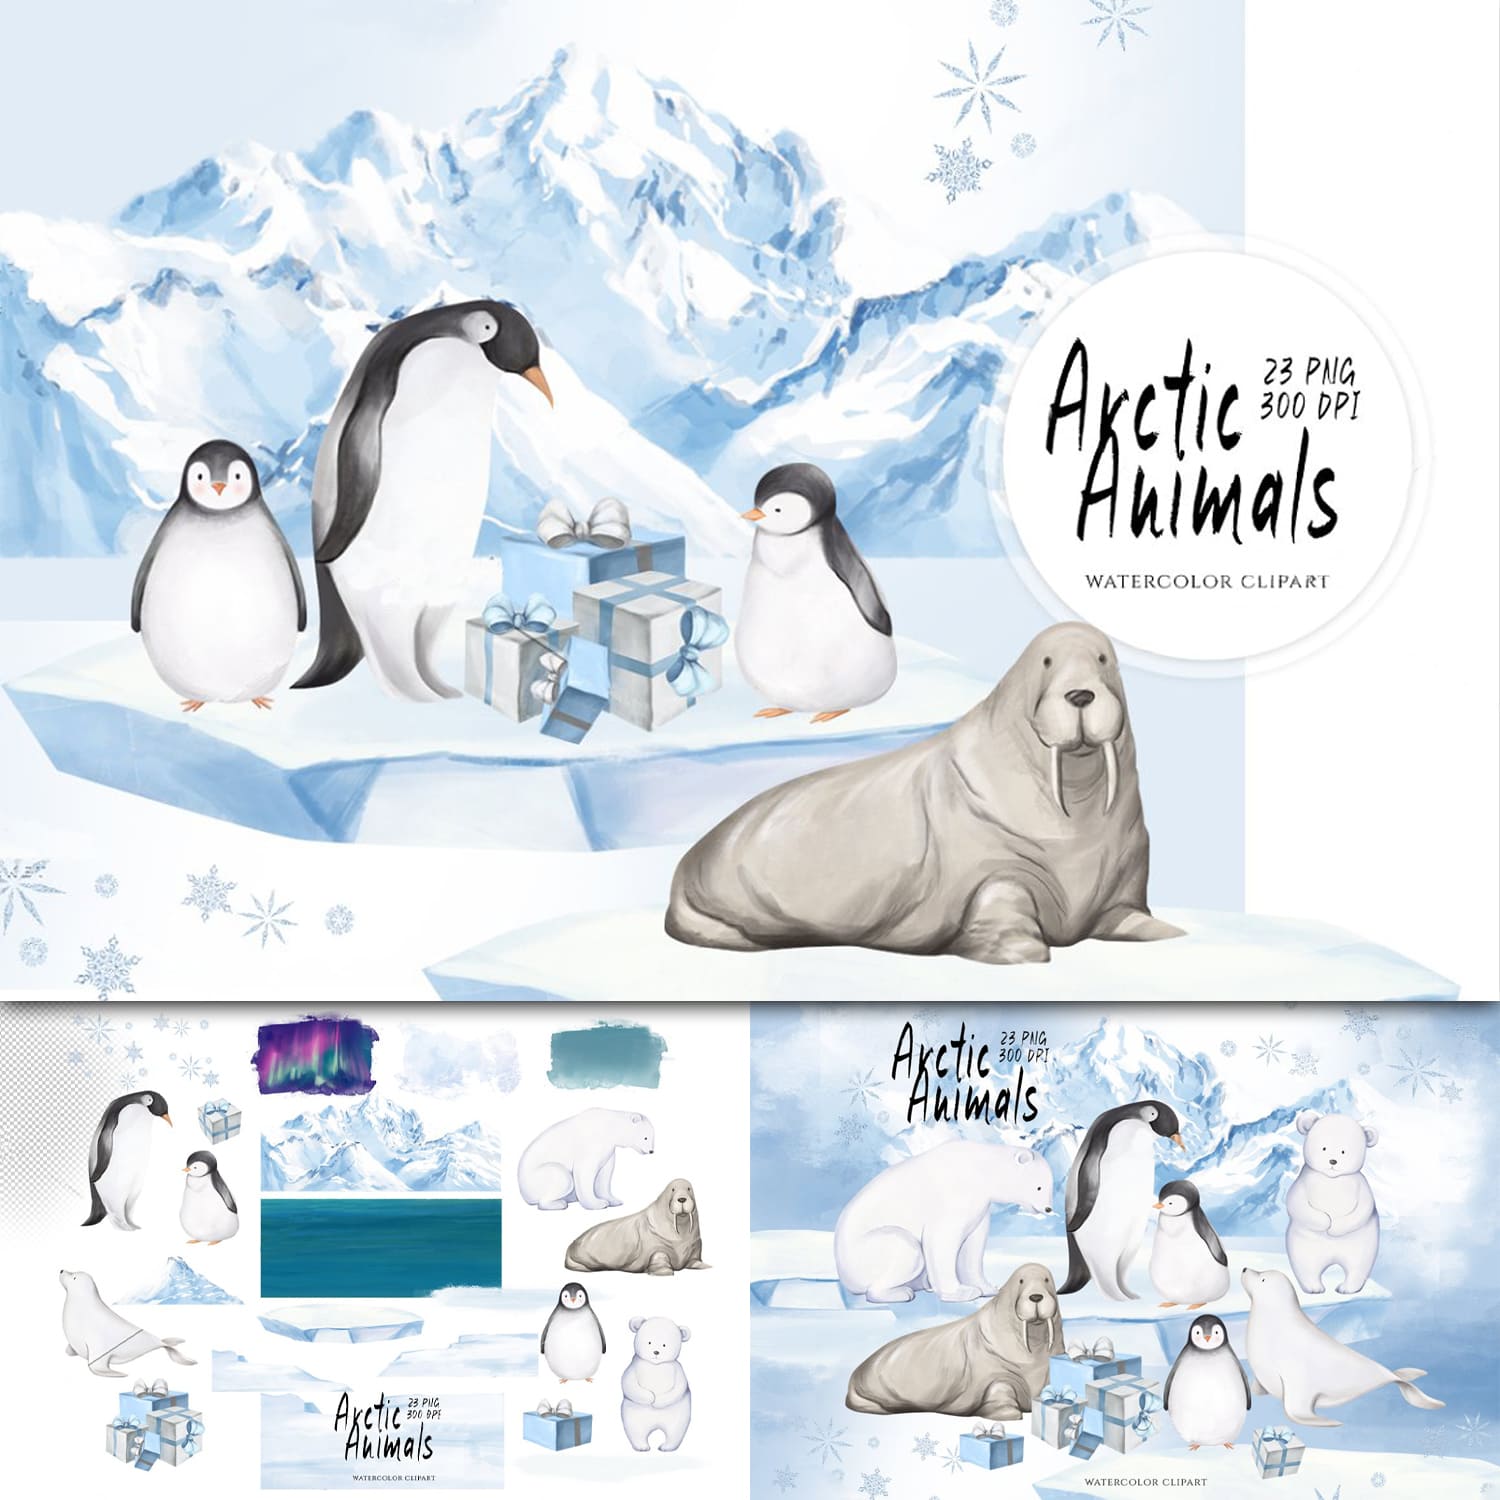 Arctic Animals Watercolor Clipart.